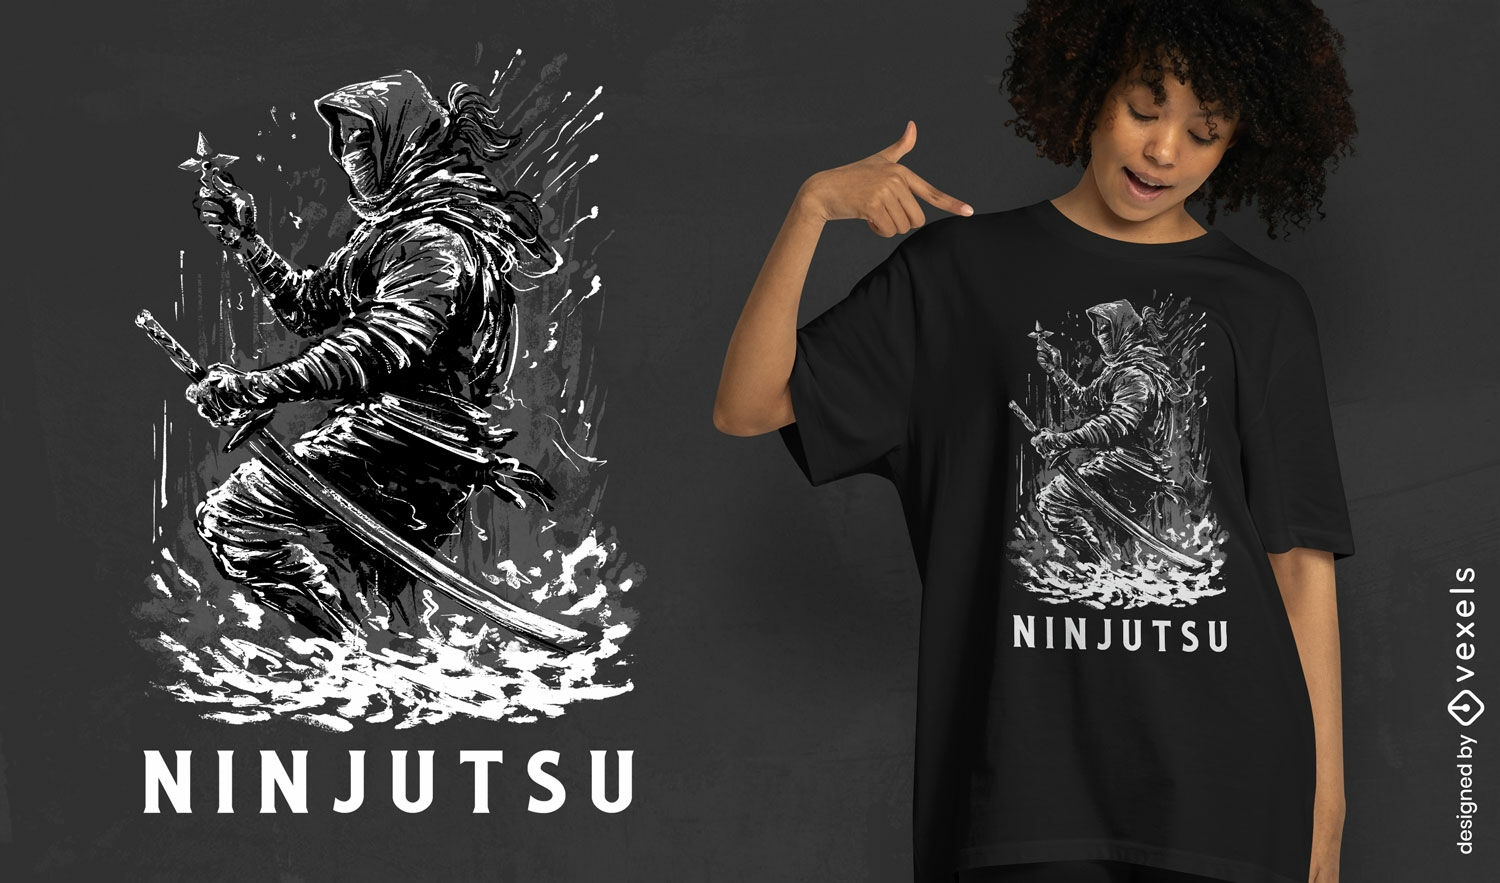 Dise?o de camiseta ninja.